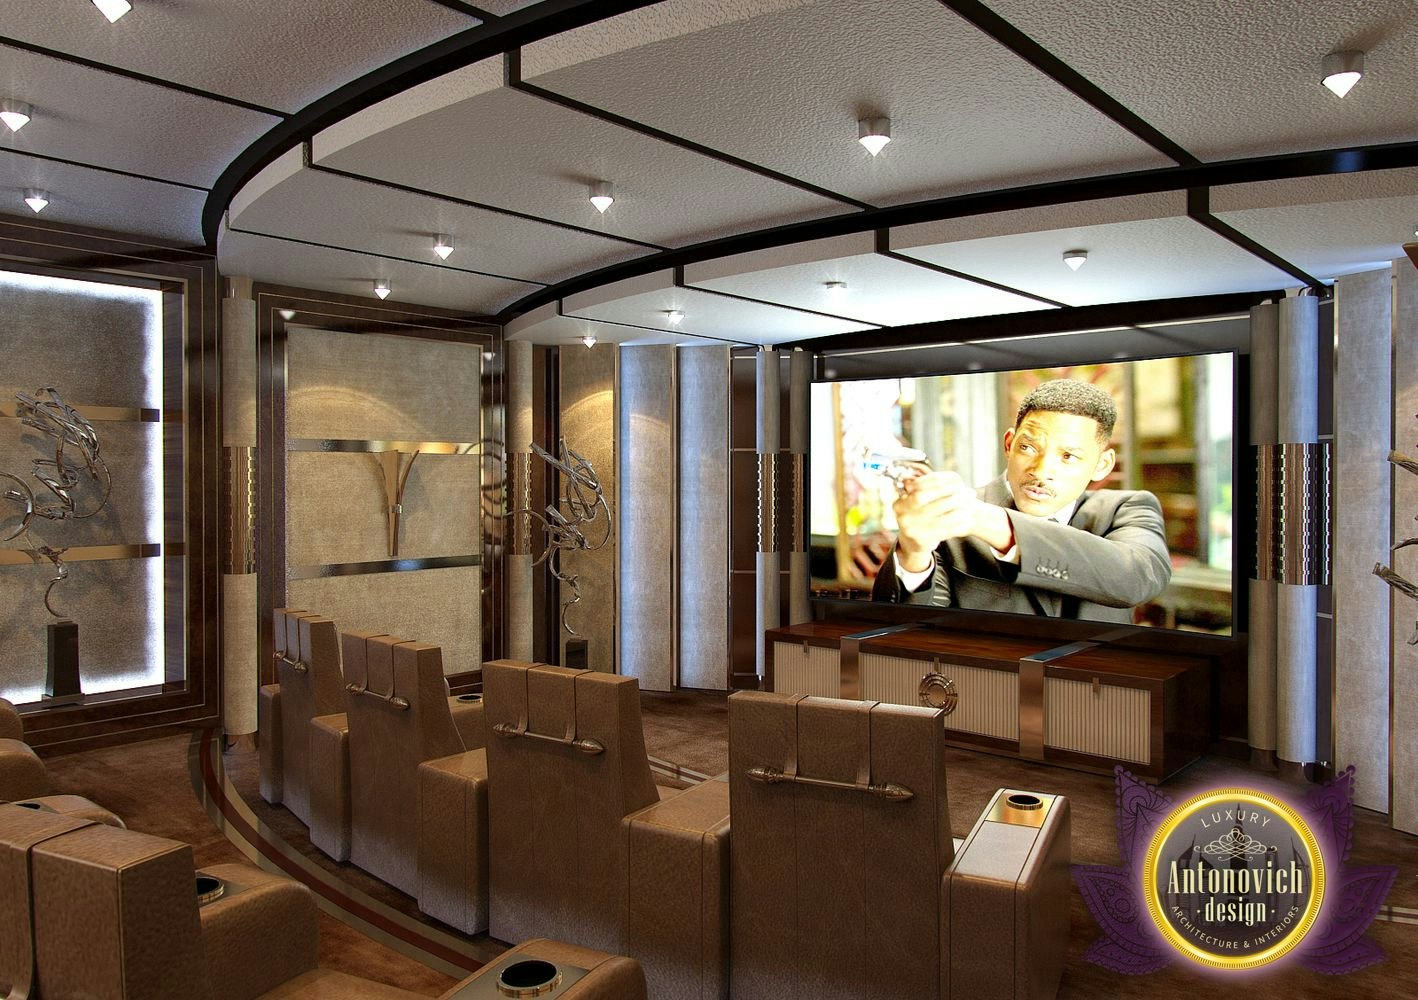 Cinema home Interior from Luxury Antonovich Design - Architizer